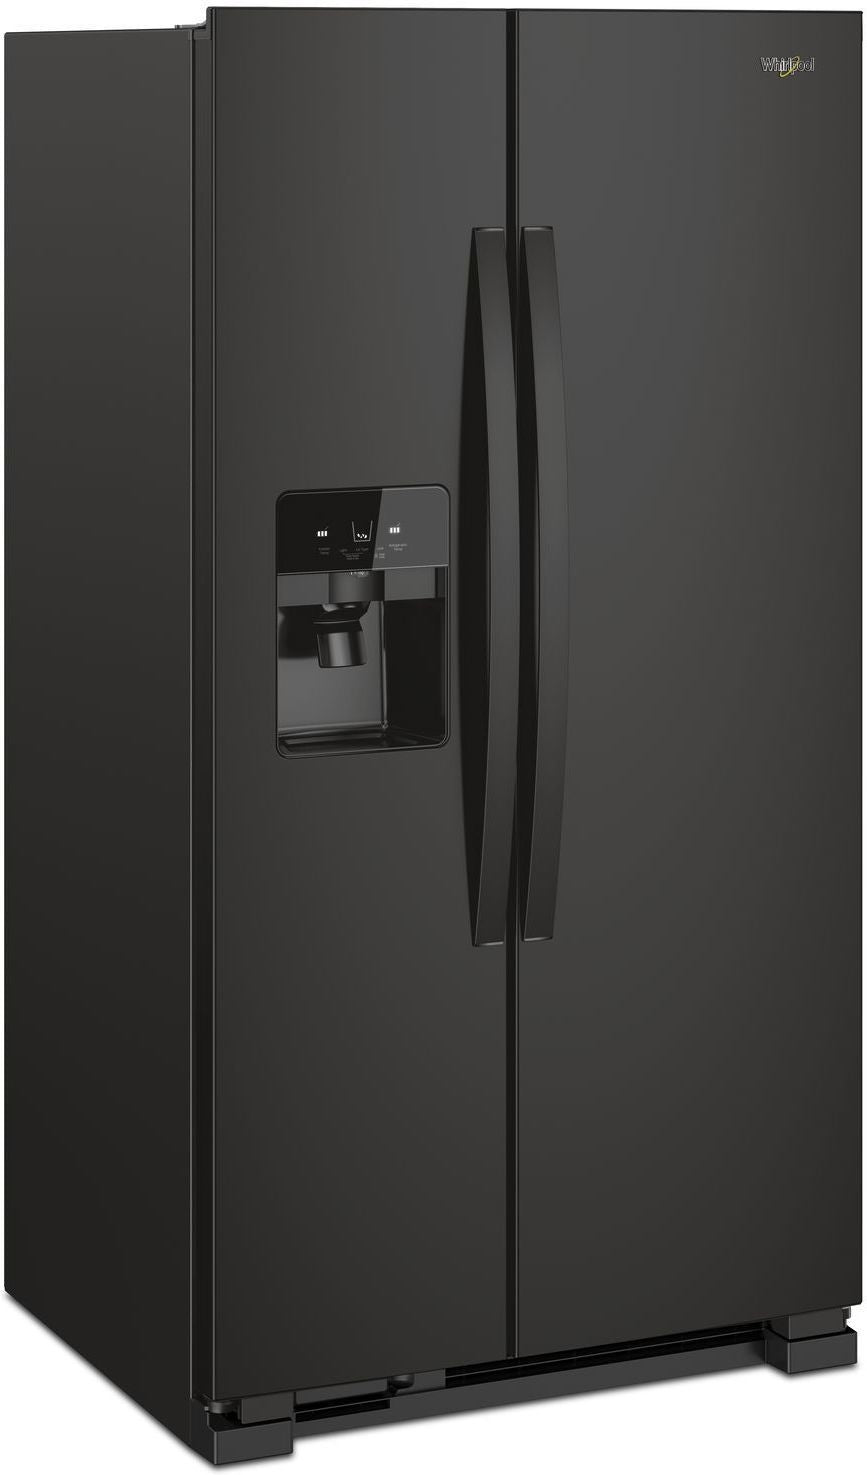 Whirlpool Black Side-by-Side Refrigerator (25 Cu. Ft.) - WRS325SDHB